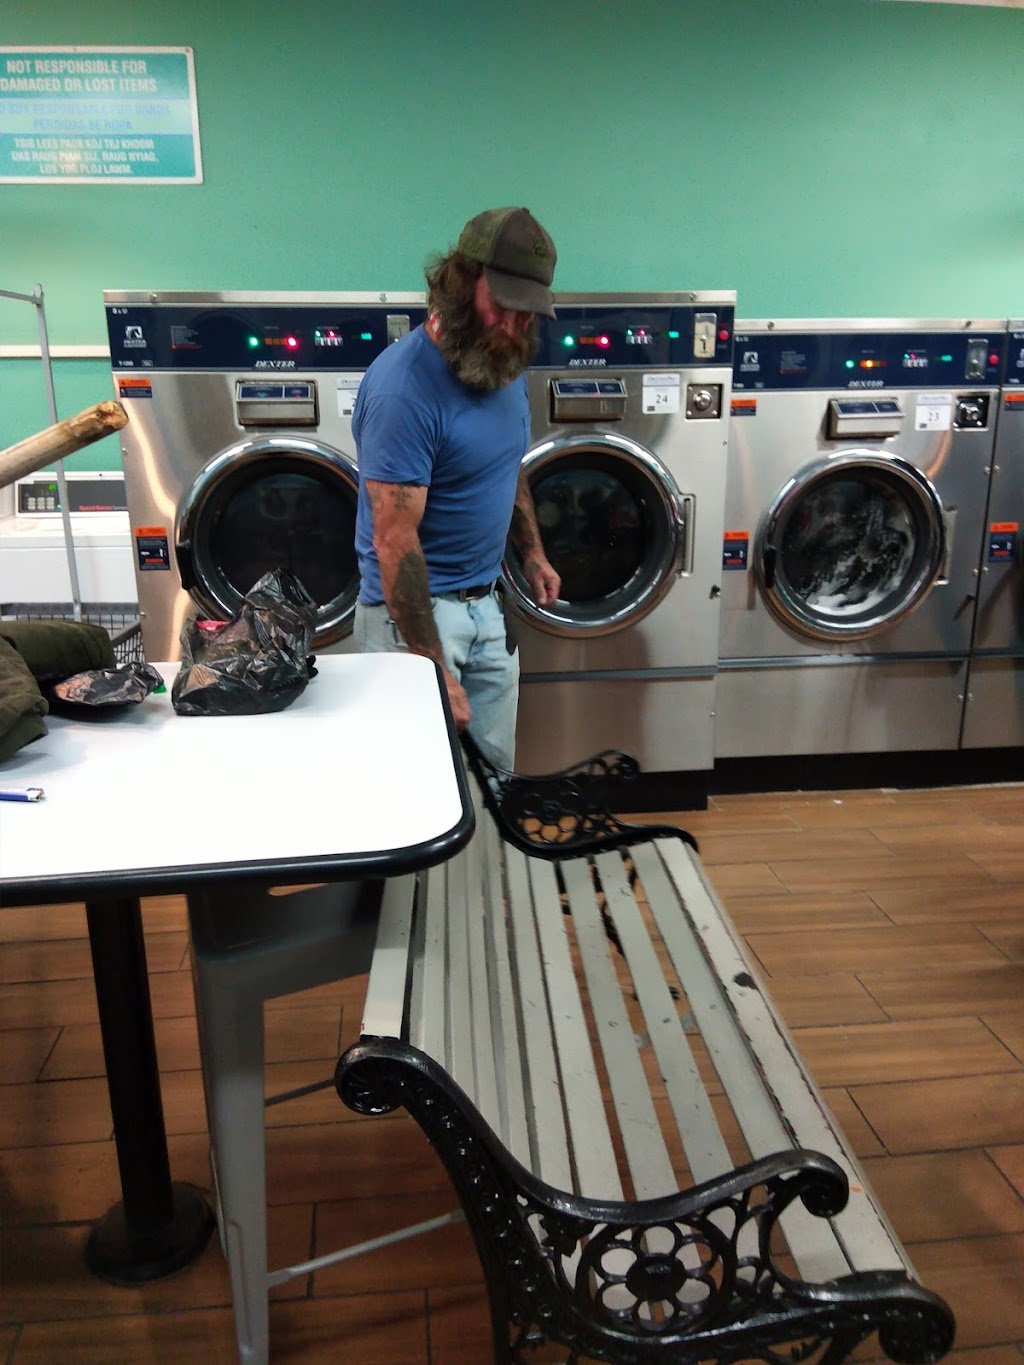 SuperClean Laundromats - Clovis California | 195 W Shaw Ave, Clovis, CA 93612, USA | Phone: (559) 287-2452